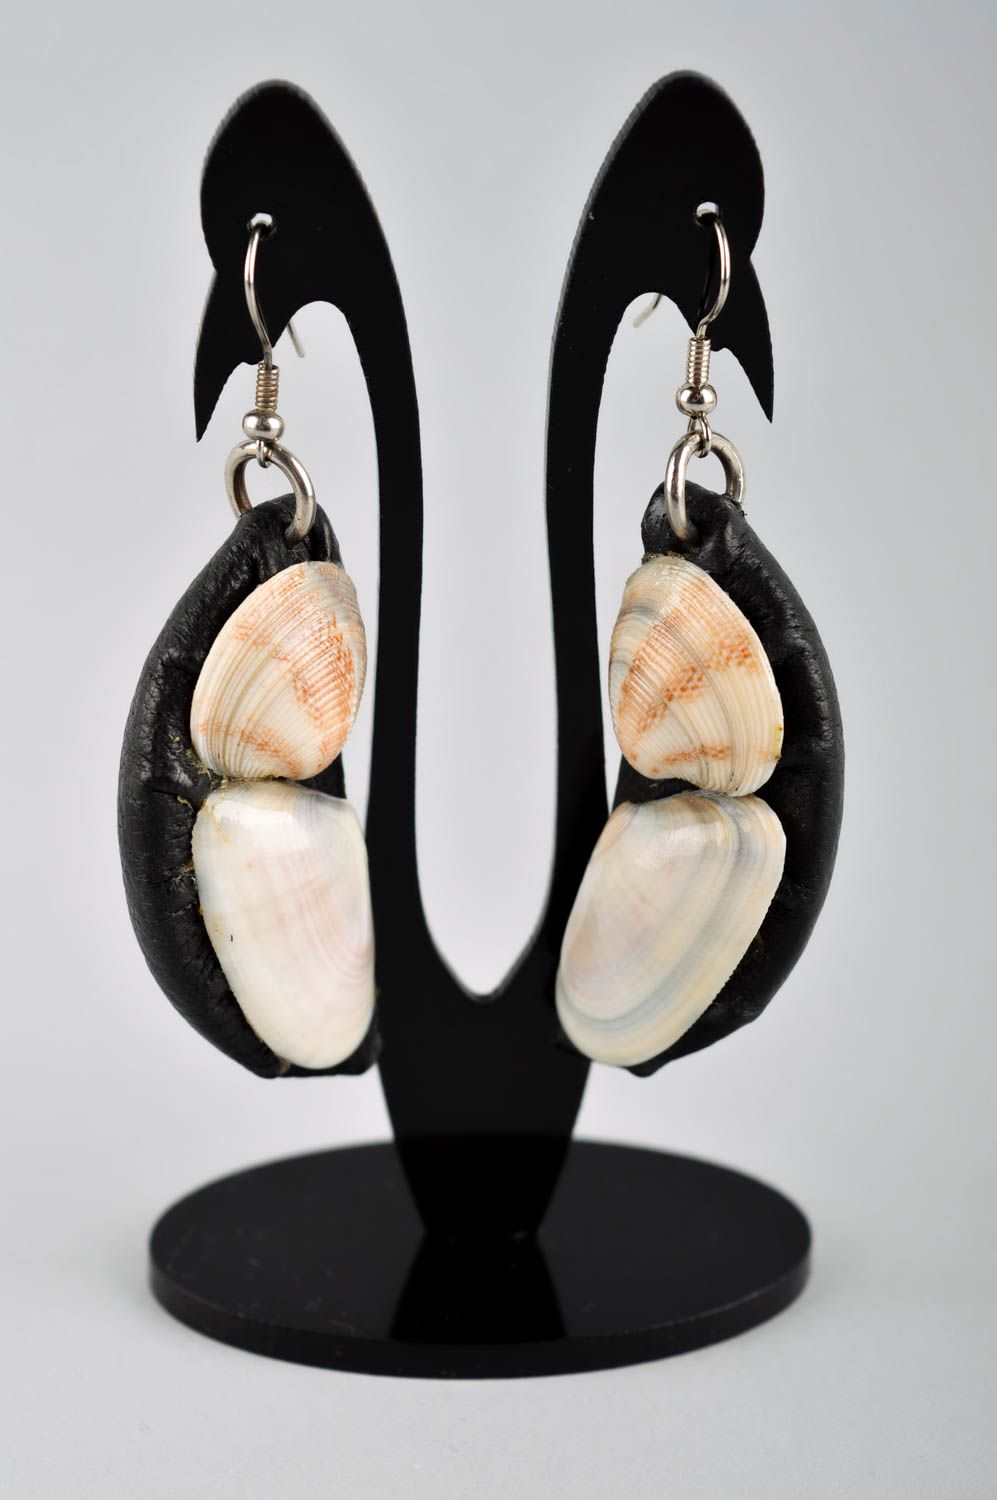 Handmade wooden earrings leather earrings in marine style jewelry designs  photo 2